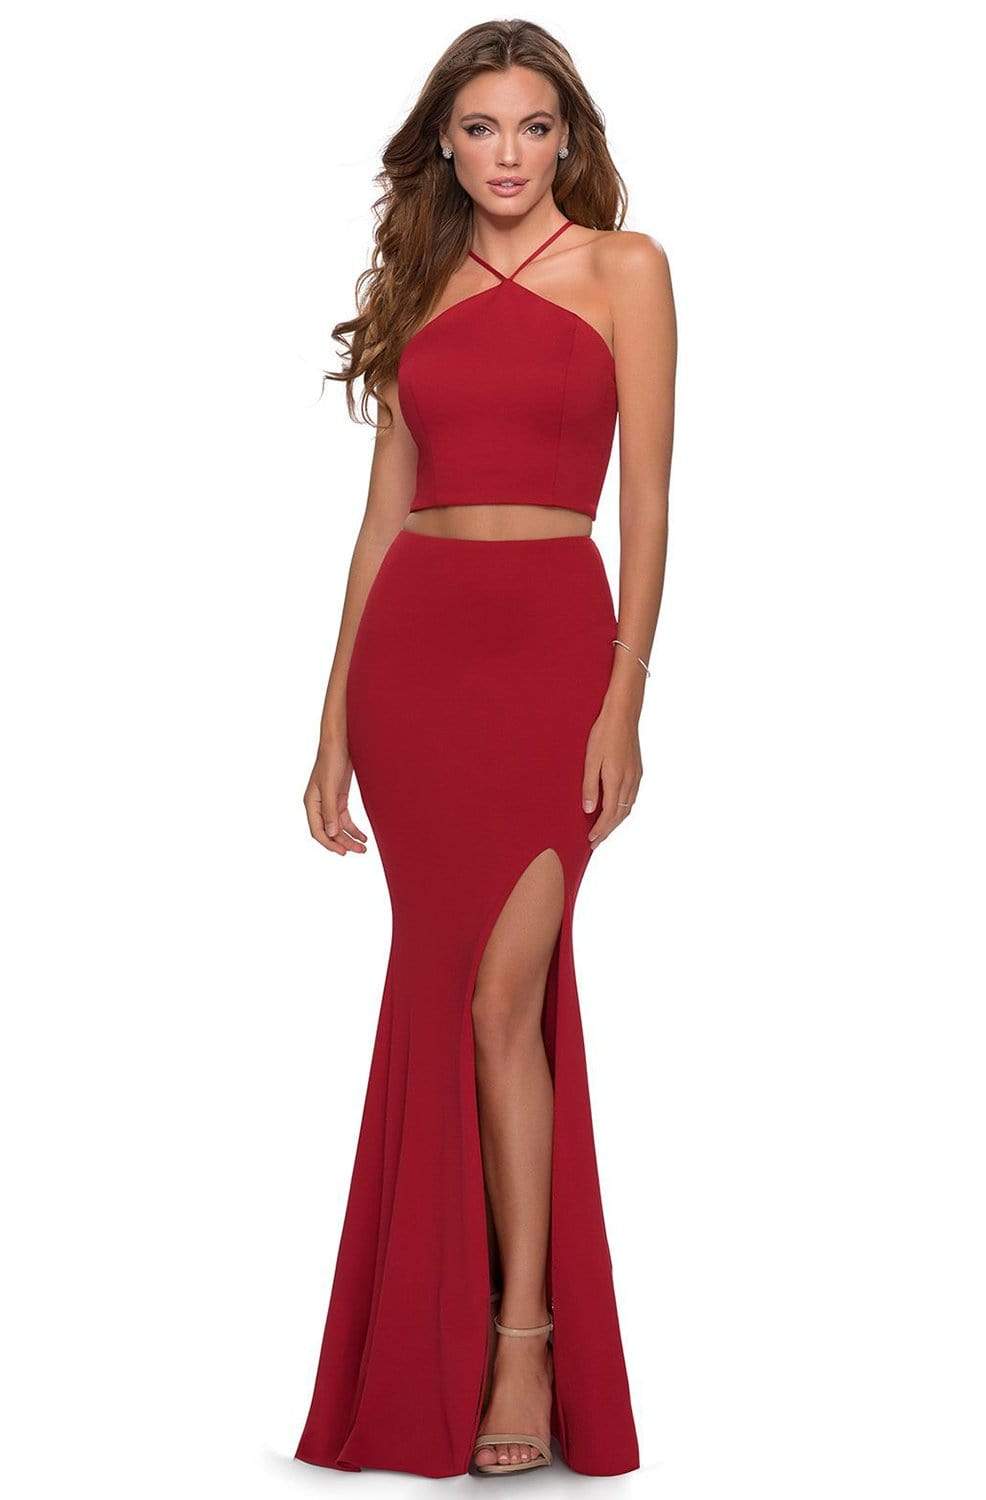 La Femme - 28624 Two Piece Halter Jersey Sheath Dress Prom Dresses 00 / Red